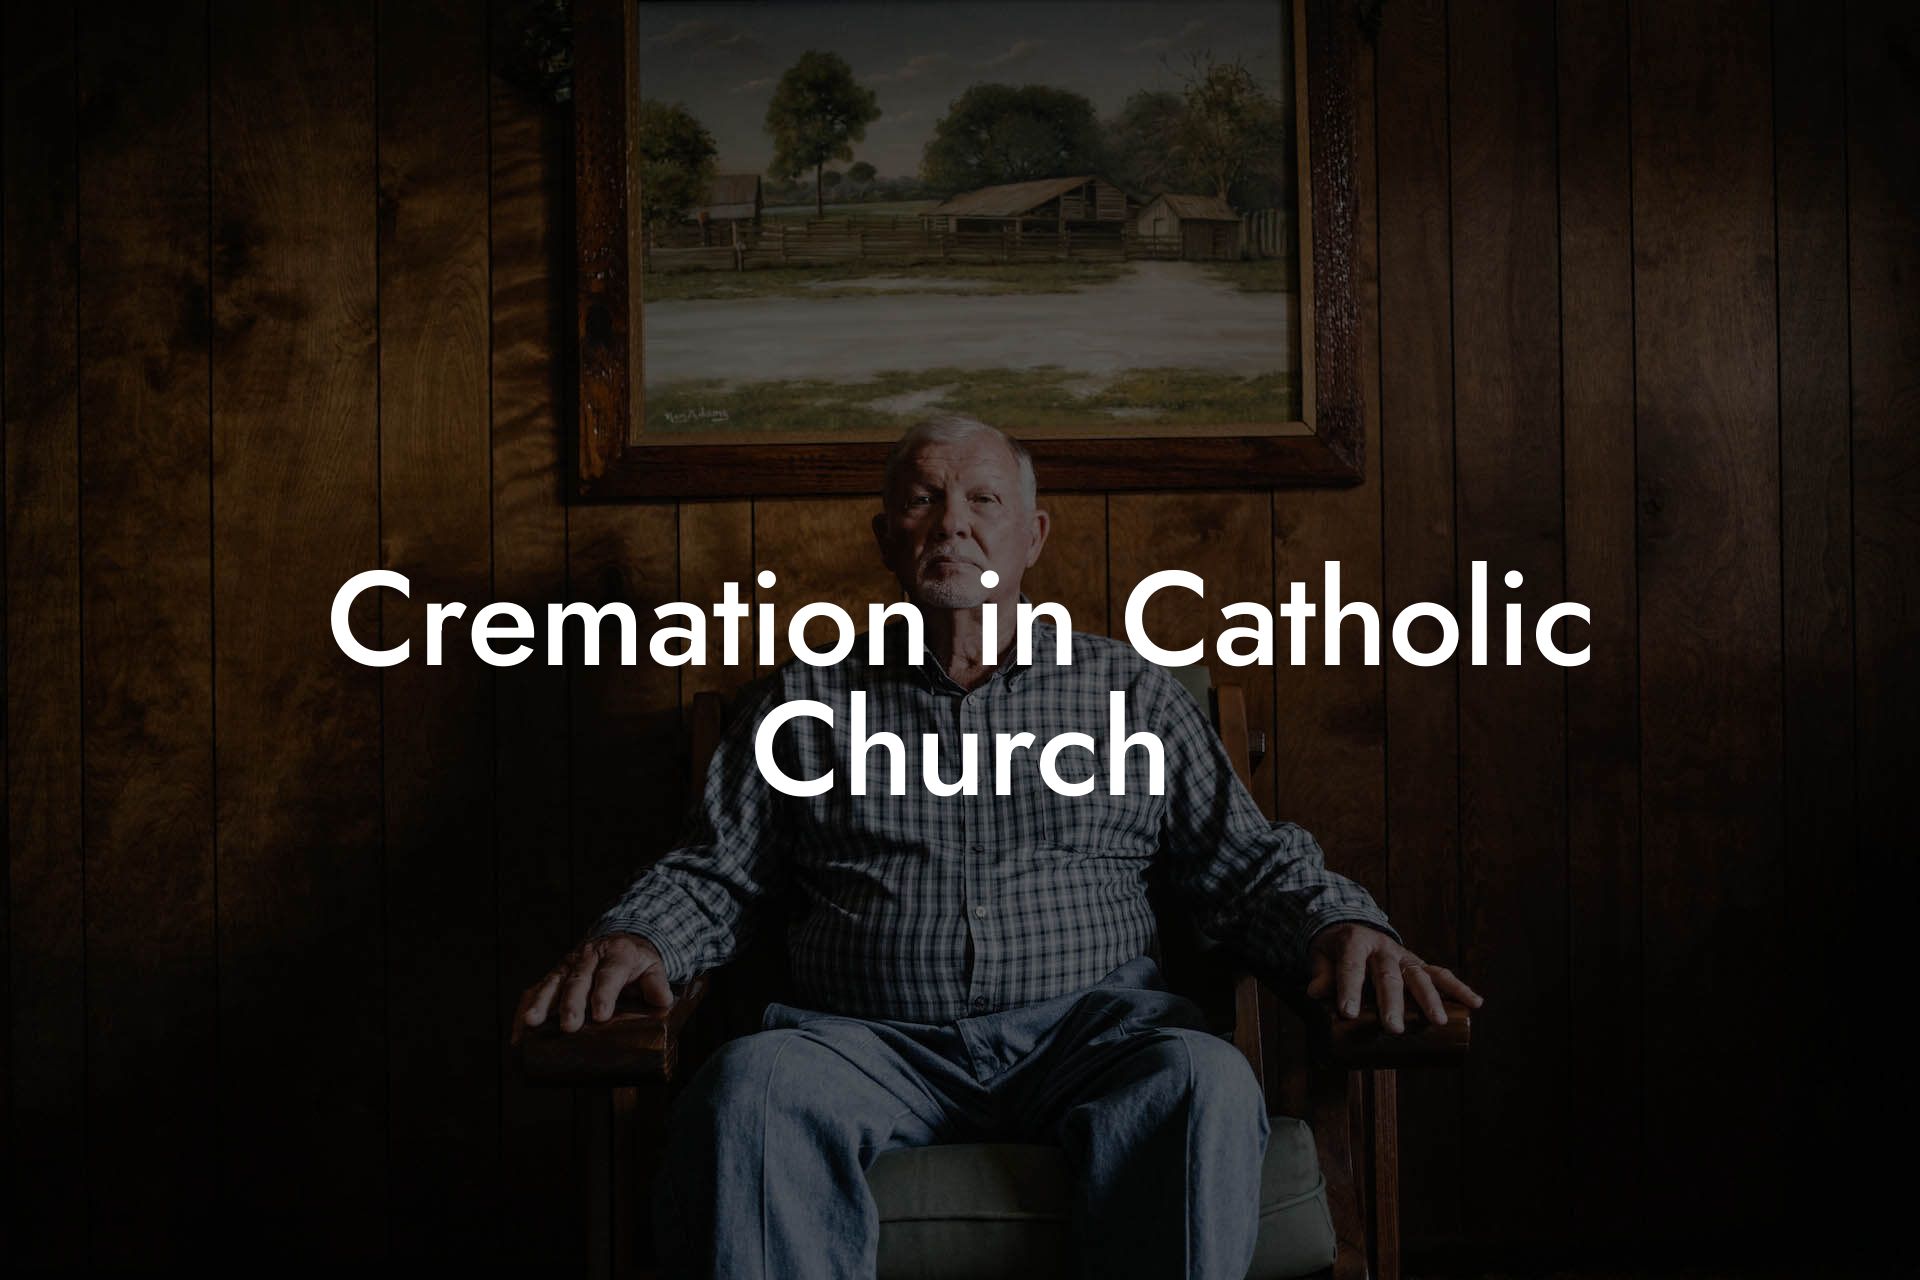 Cremation in Catholic Church